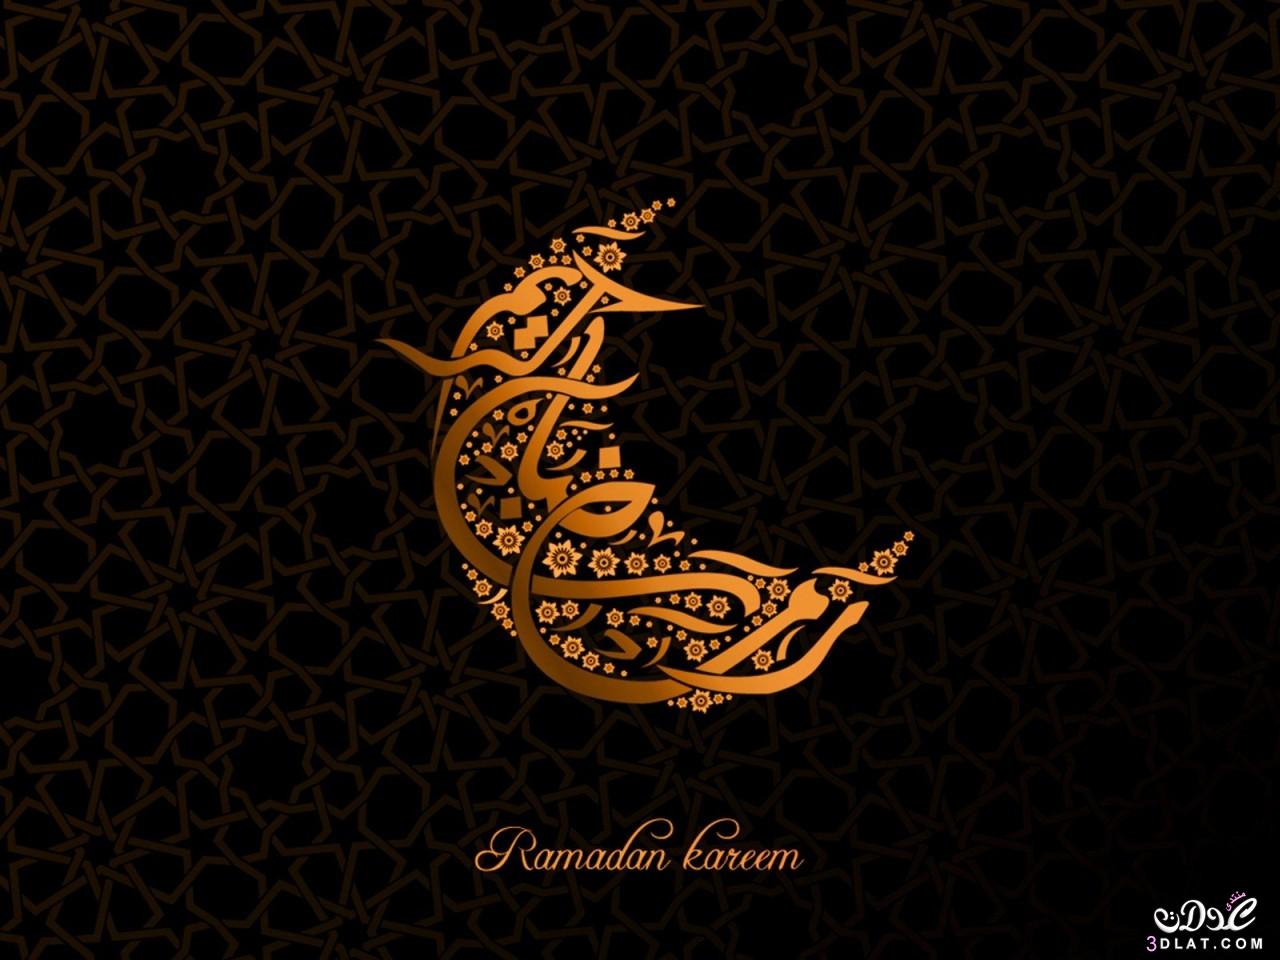 صور شهر رمضان صور رمضانية 2017صور تهنئة بشهر رمضان,صور رمضان كريم كل عام وانتم بخير 3dlat.net_13_15_1061_2015-1390179488-970